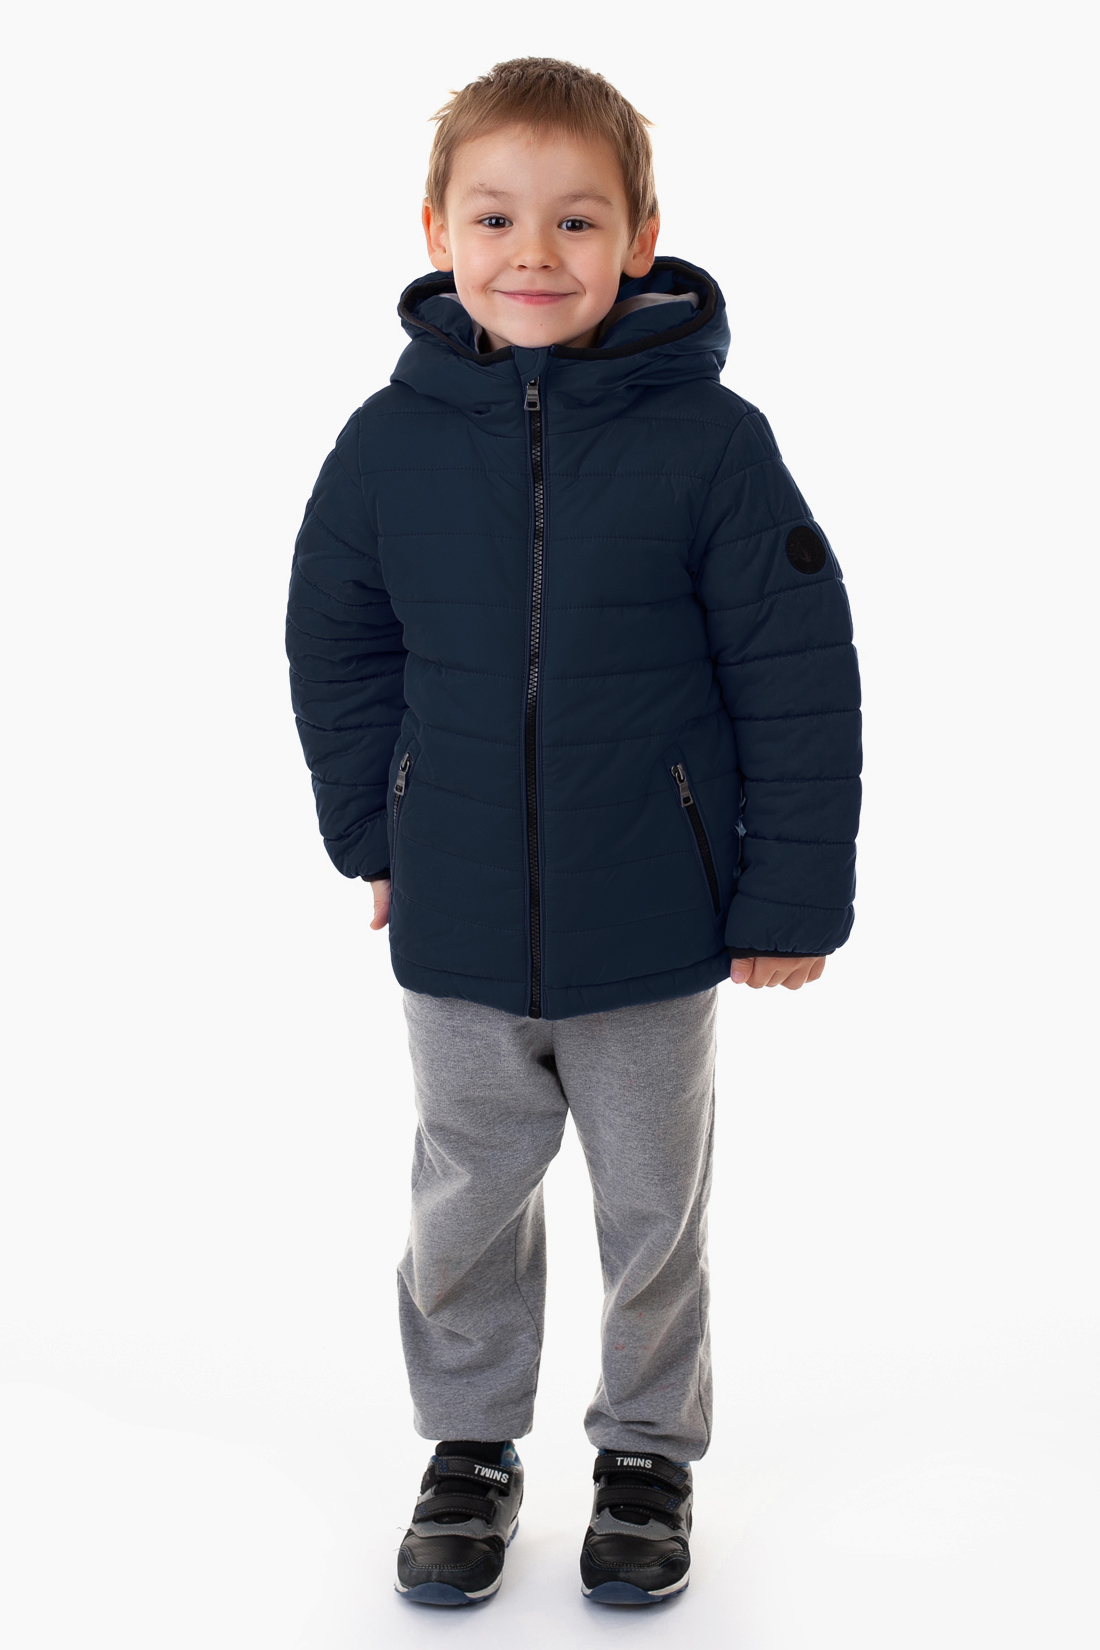 Куртка для мальчика (арт. baon BK538505), размер 110-116, цвет синий Куртка для мальчика (арт. baon BK538505) - фото 3